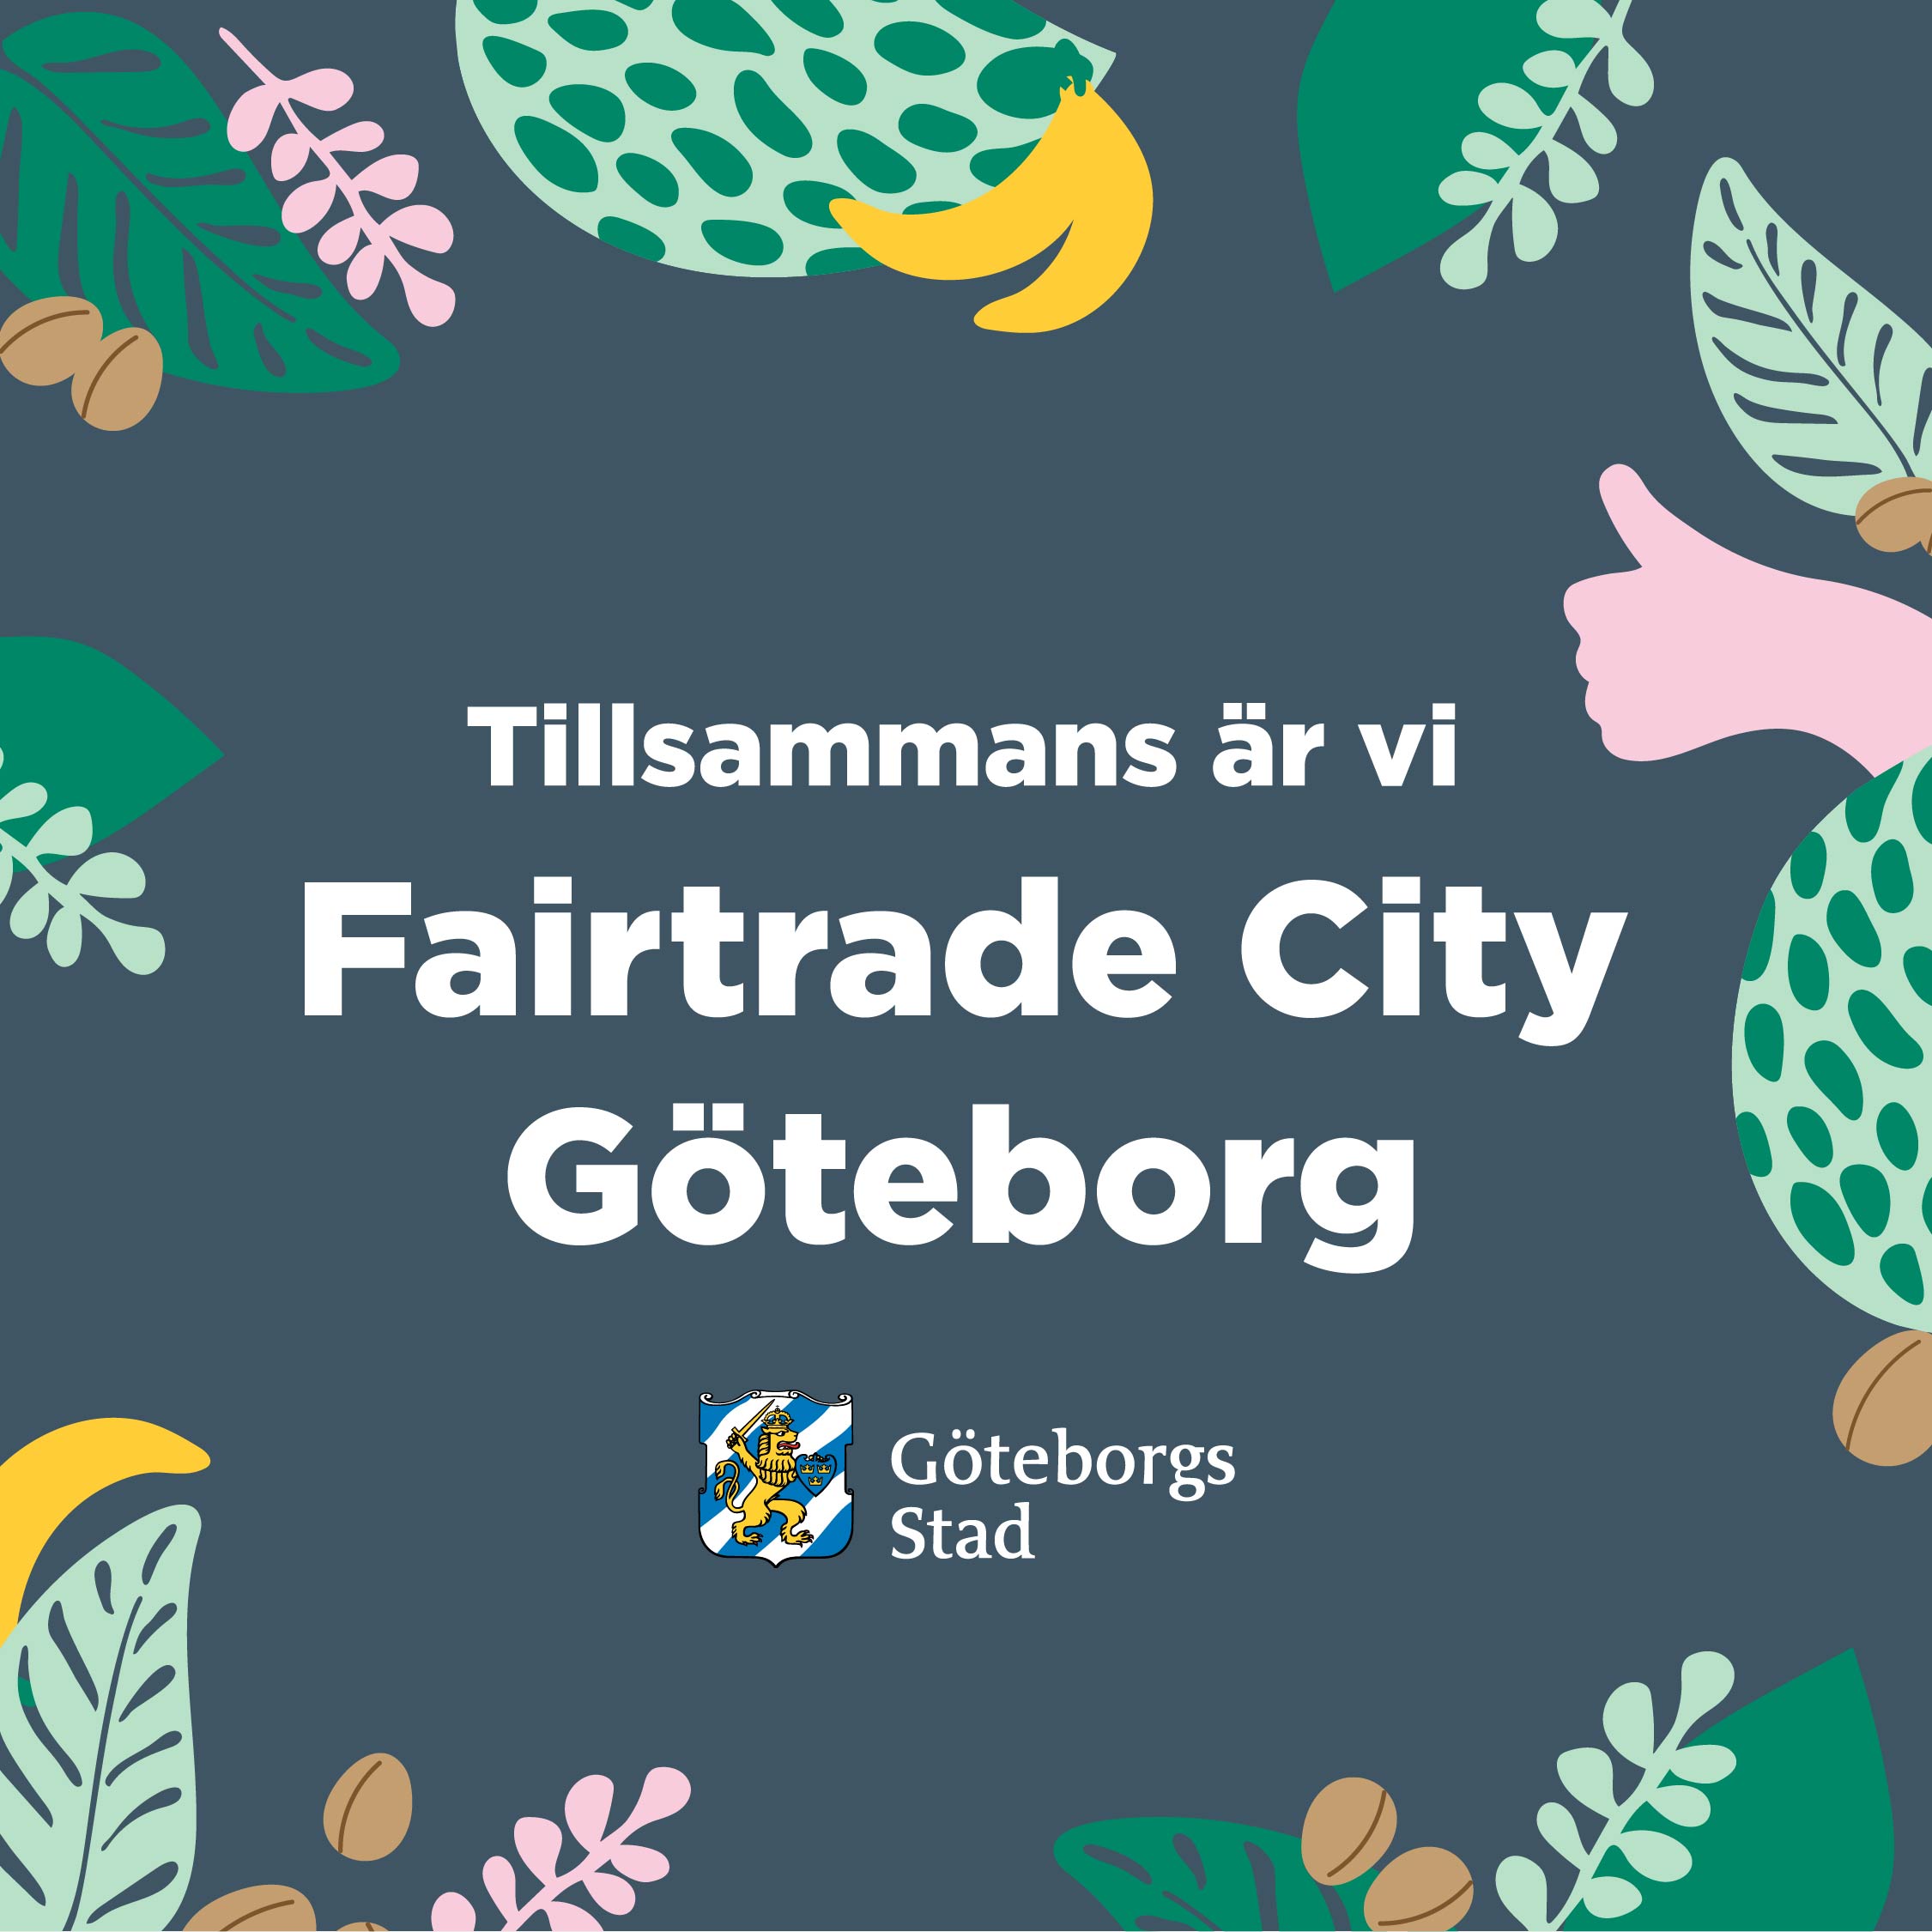 Fairtrade City Sociala medier Fairtrade City Goteborg Instagram 1080x1080px BILD